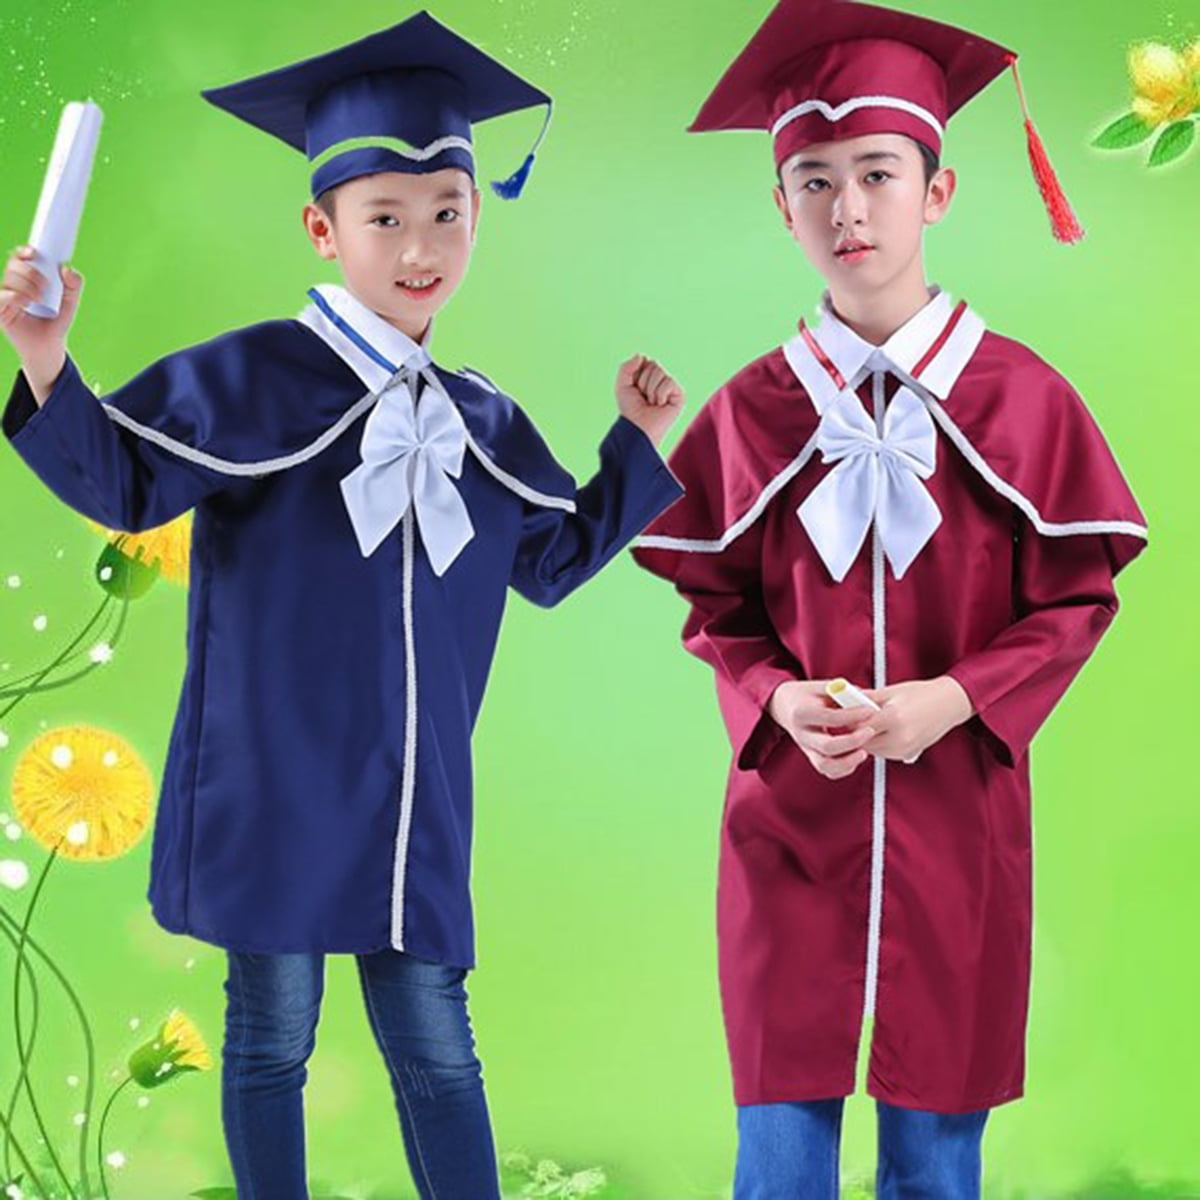 Graduation clipart freebie | Preschool graduation, Kids graduation, Clip art